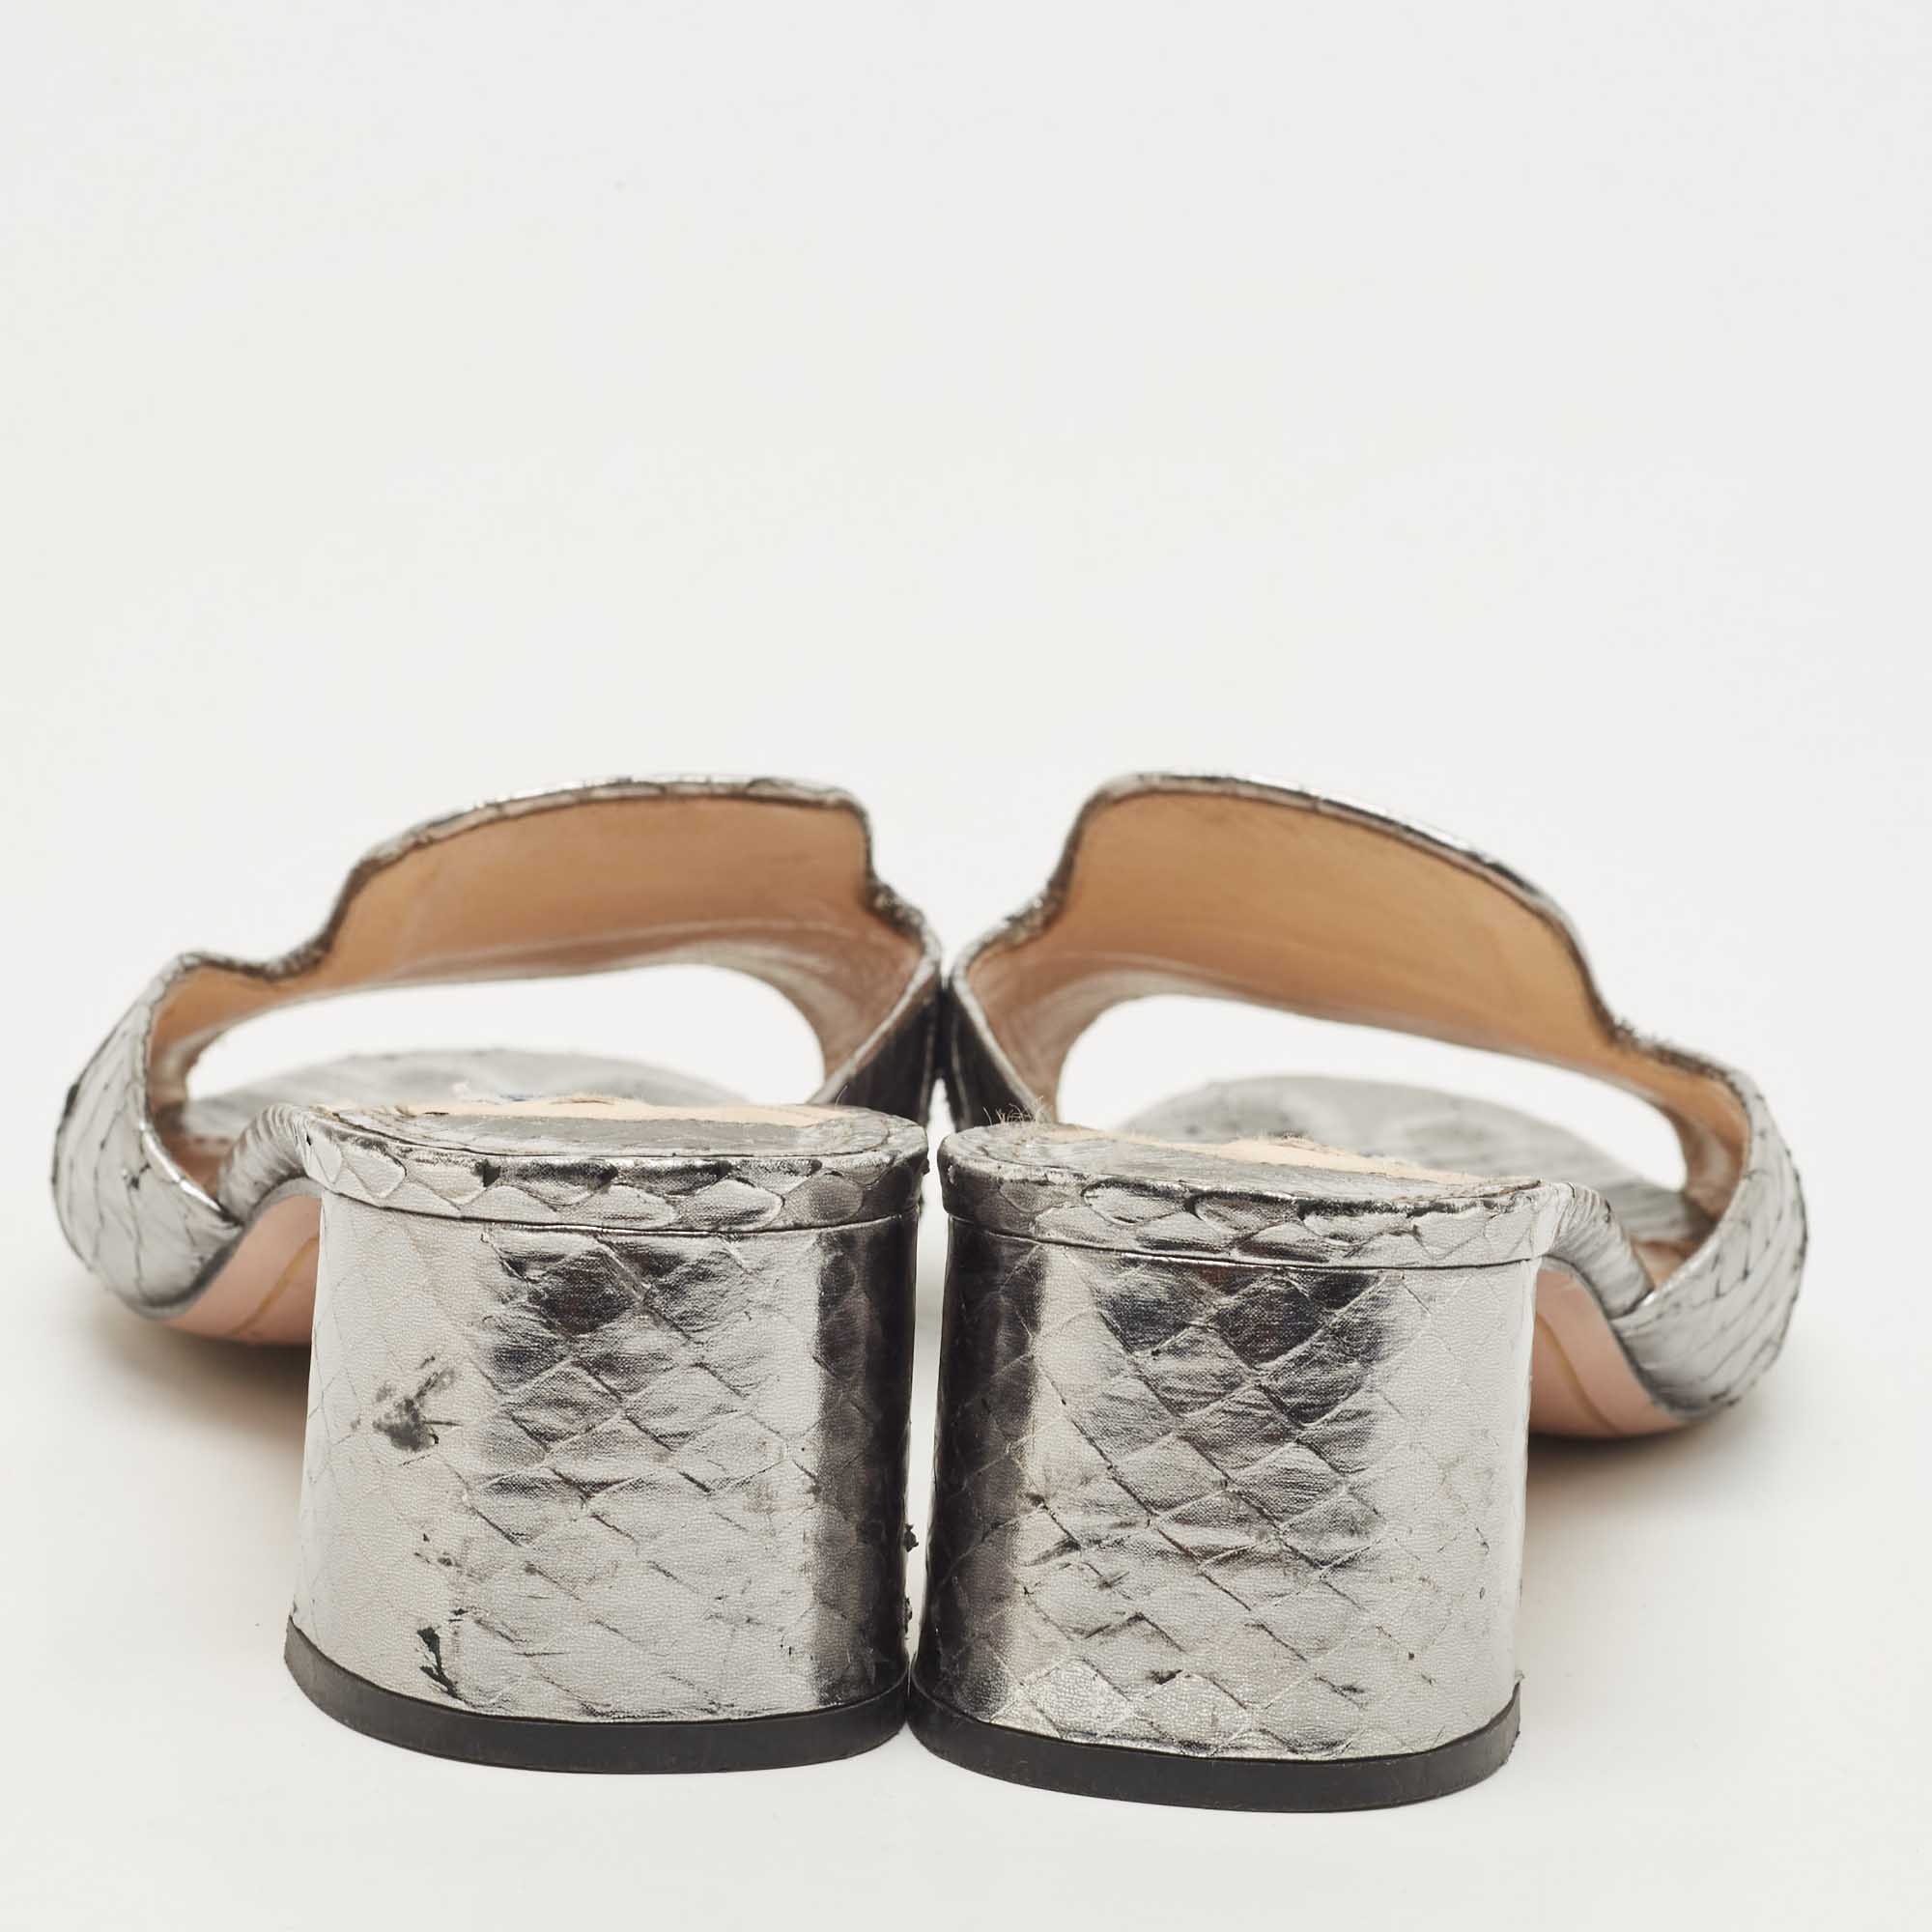 Prada Metallic Grey Python Embossed Leather Slide Sandals Size 37